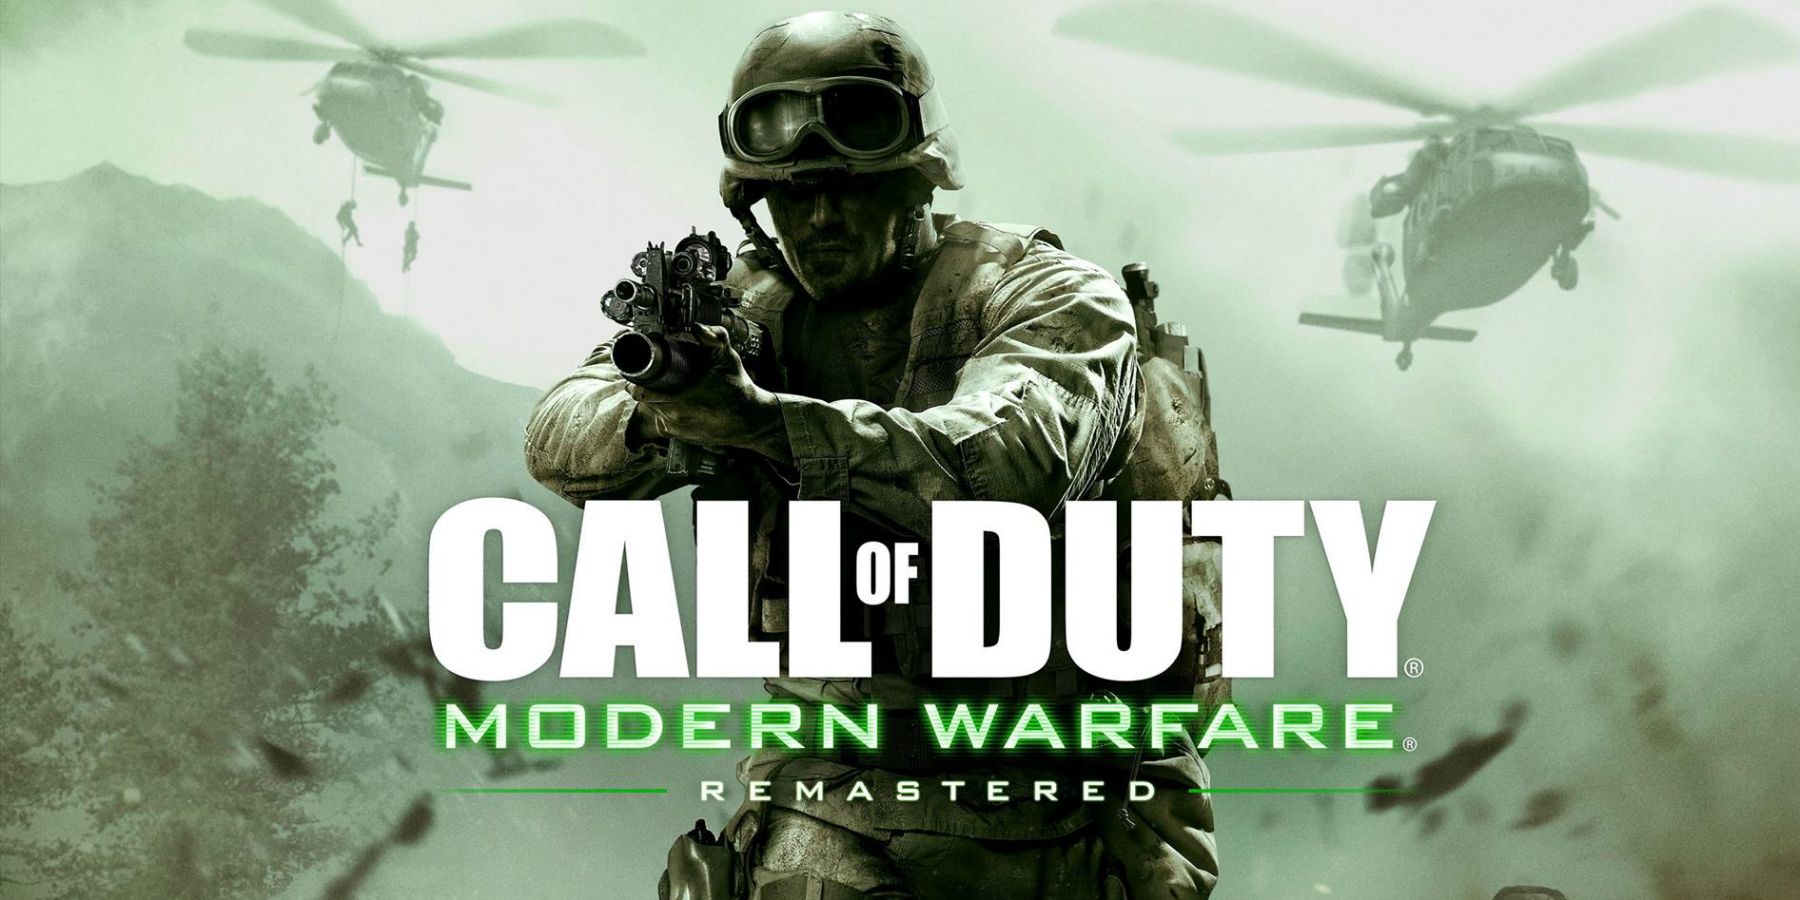 A soldier runs across a battlefield in Call of Duty Modern Warfare Remastered 